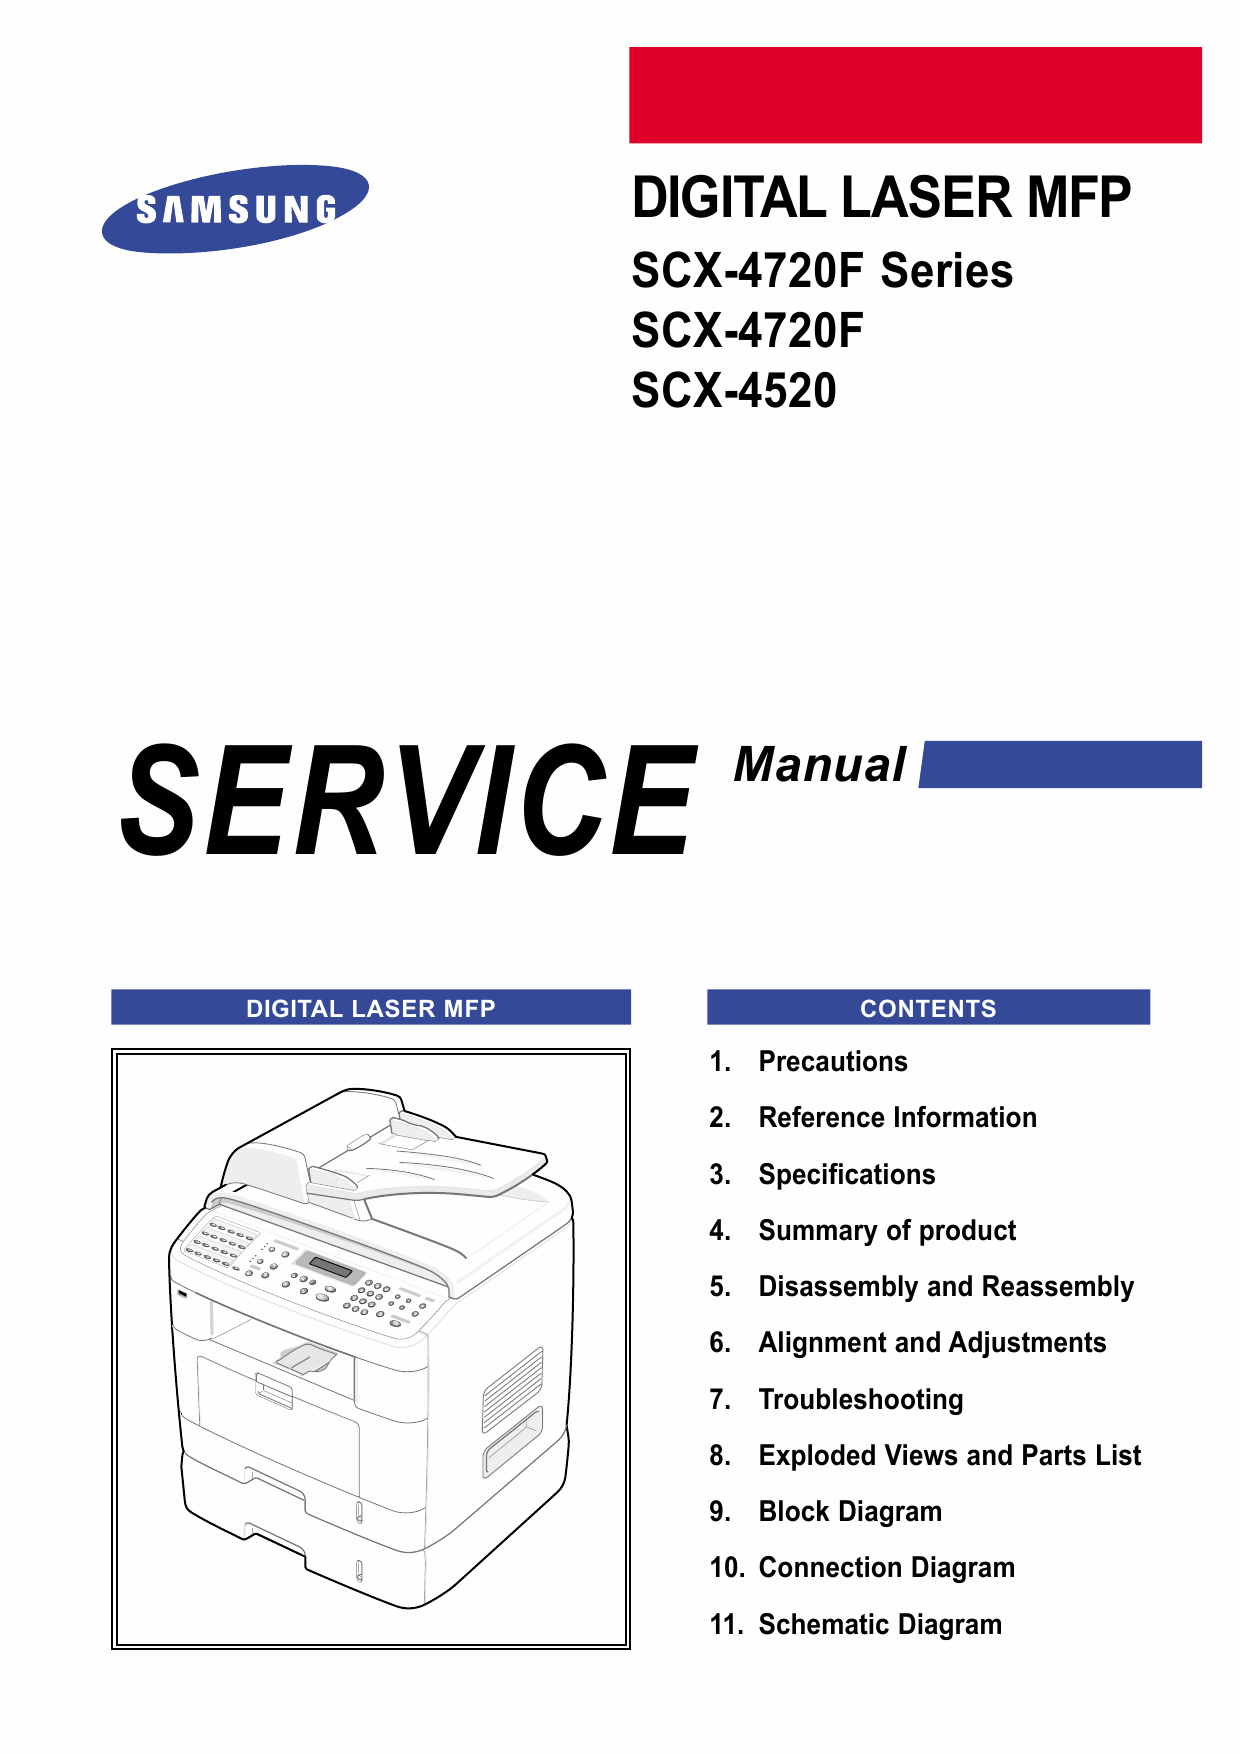 Samsung Digital-Laser-MFP SCX-4720F 4520 Parts and Service Manual-1